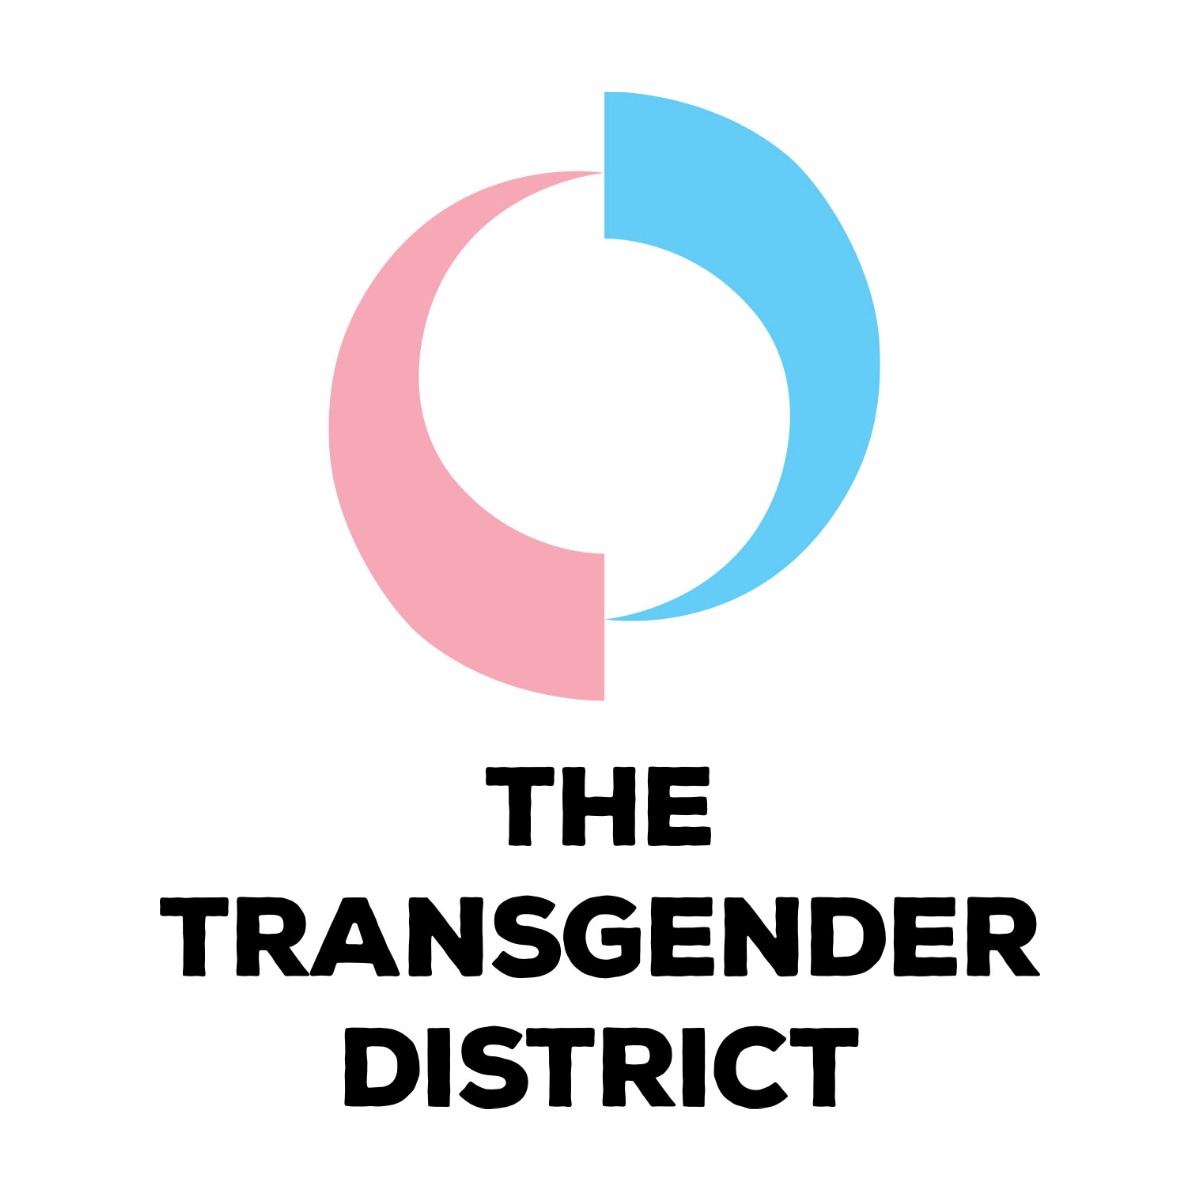 LGBTQ Organization in Los Angeles California - Transgender District